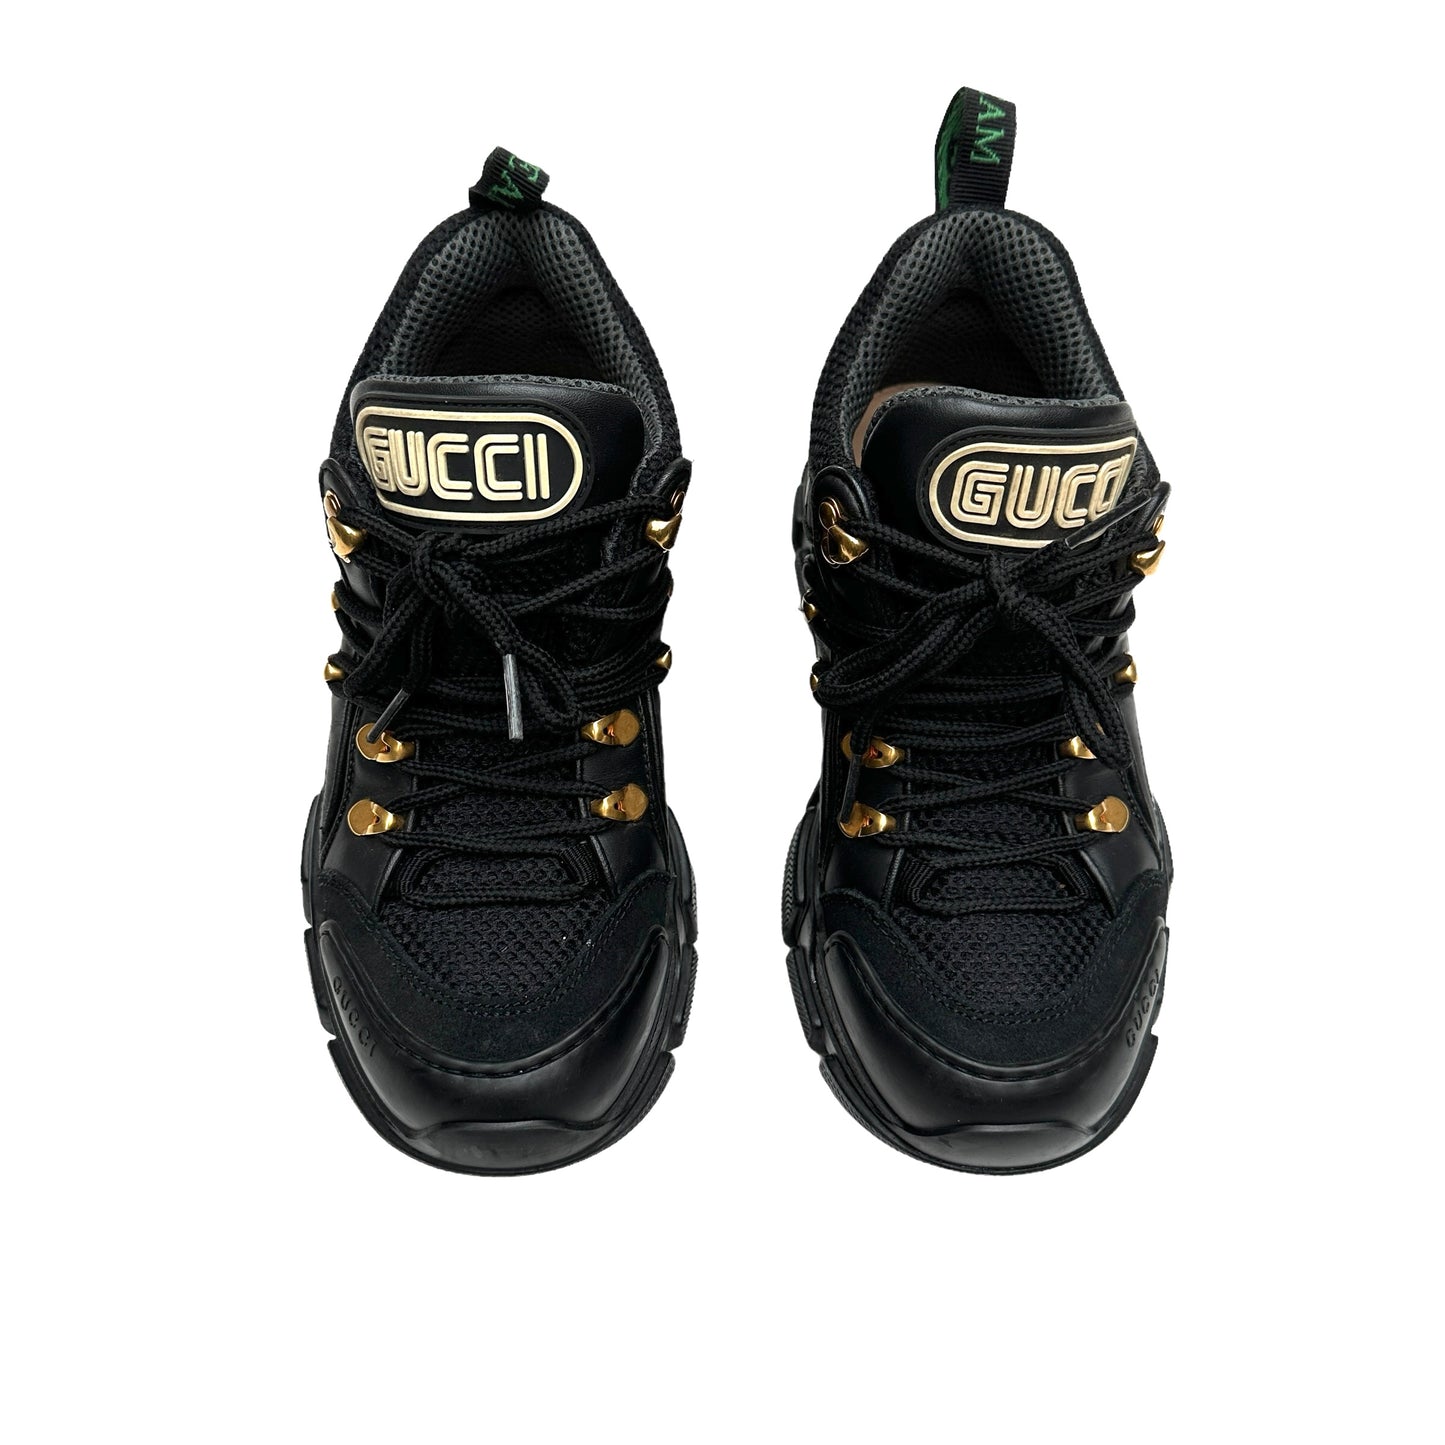 Flashtrek x SEGA Sneakers - 6.5